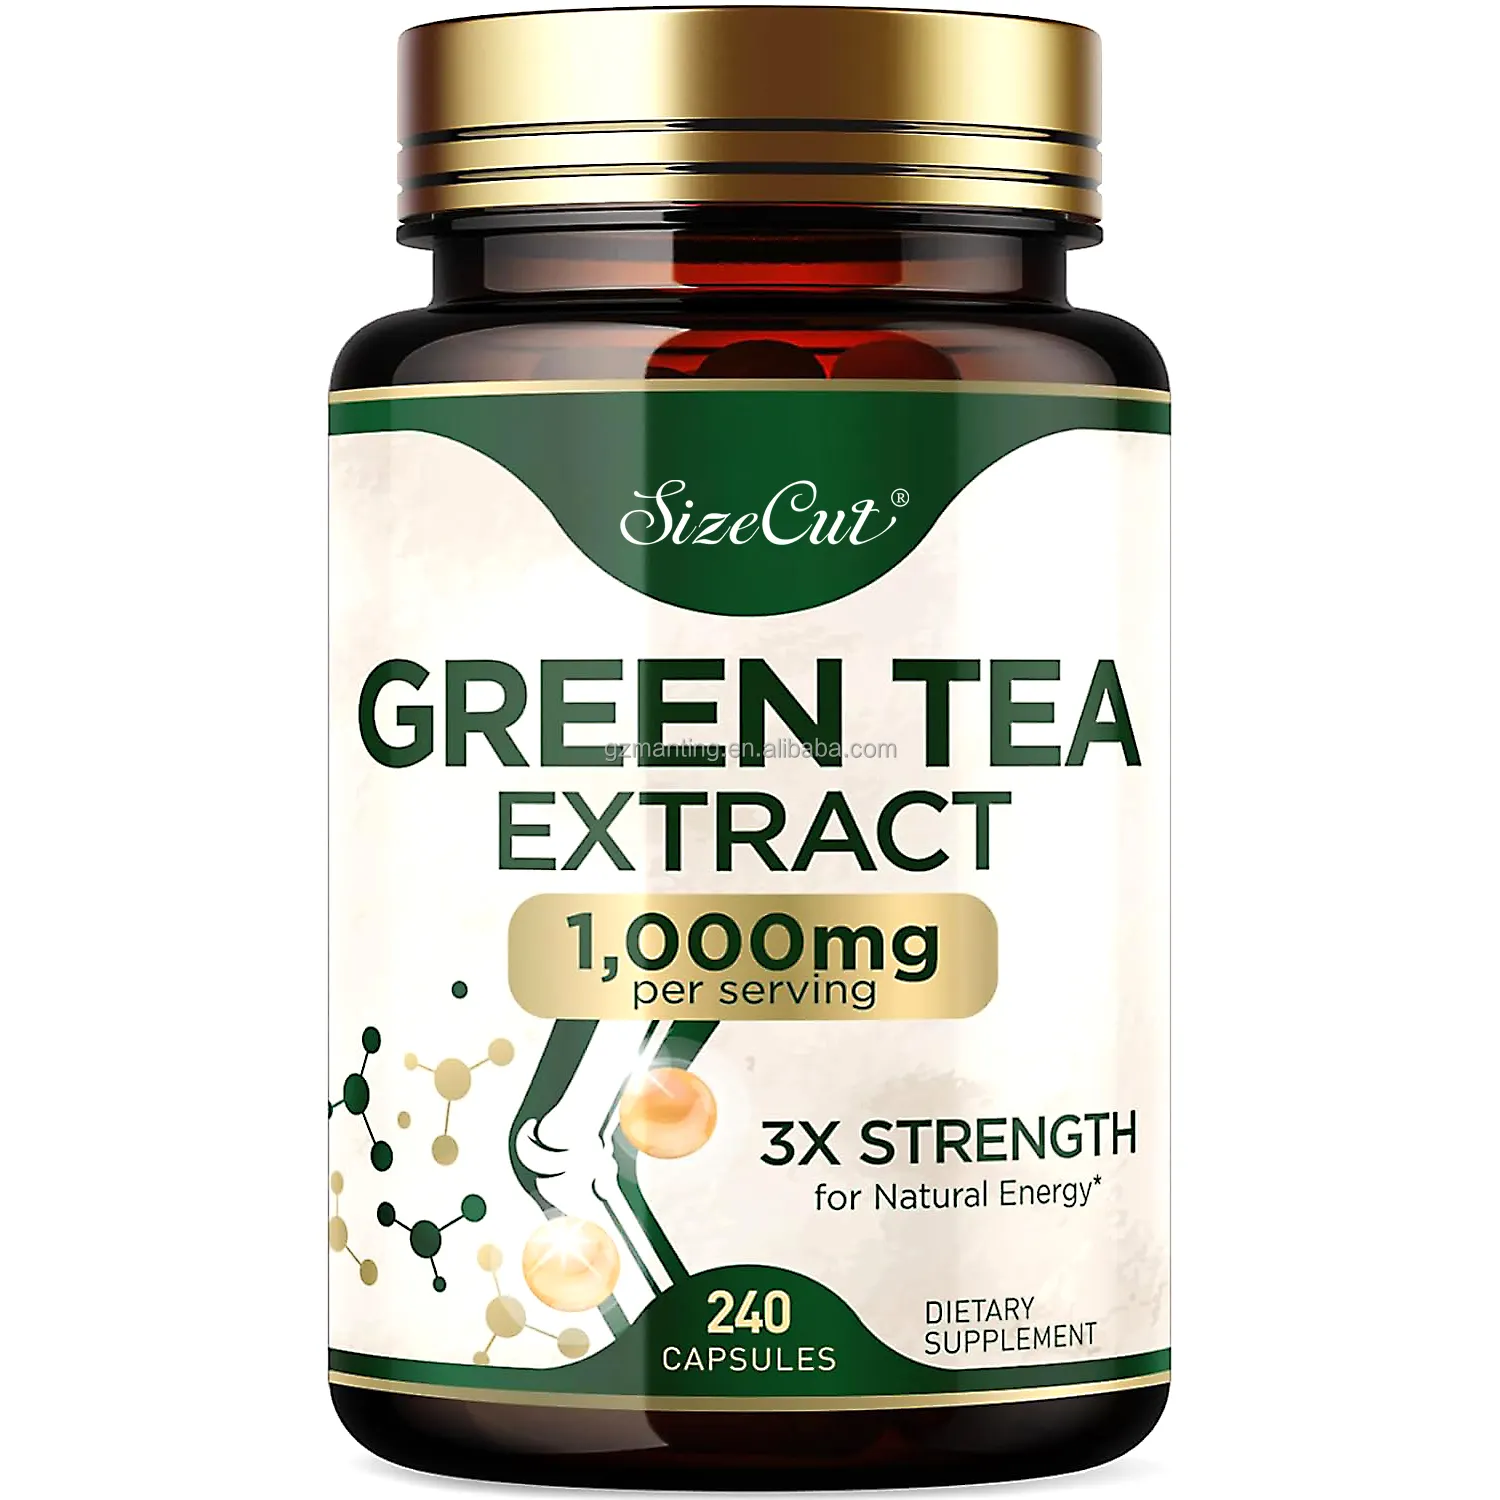 Hochwertiger Großhandel grüner Tee 15 Tage Entgiftung Abnehmen Pillen Fettverbrenner Kapseln Gewicht verlieren